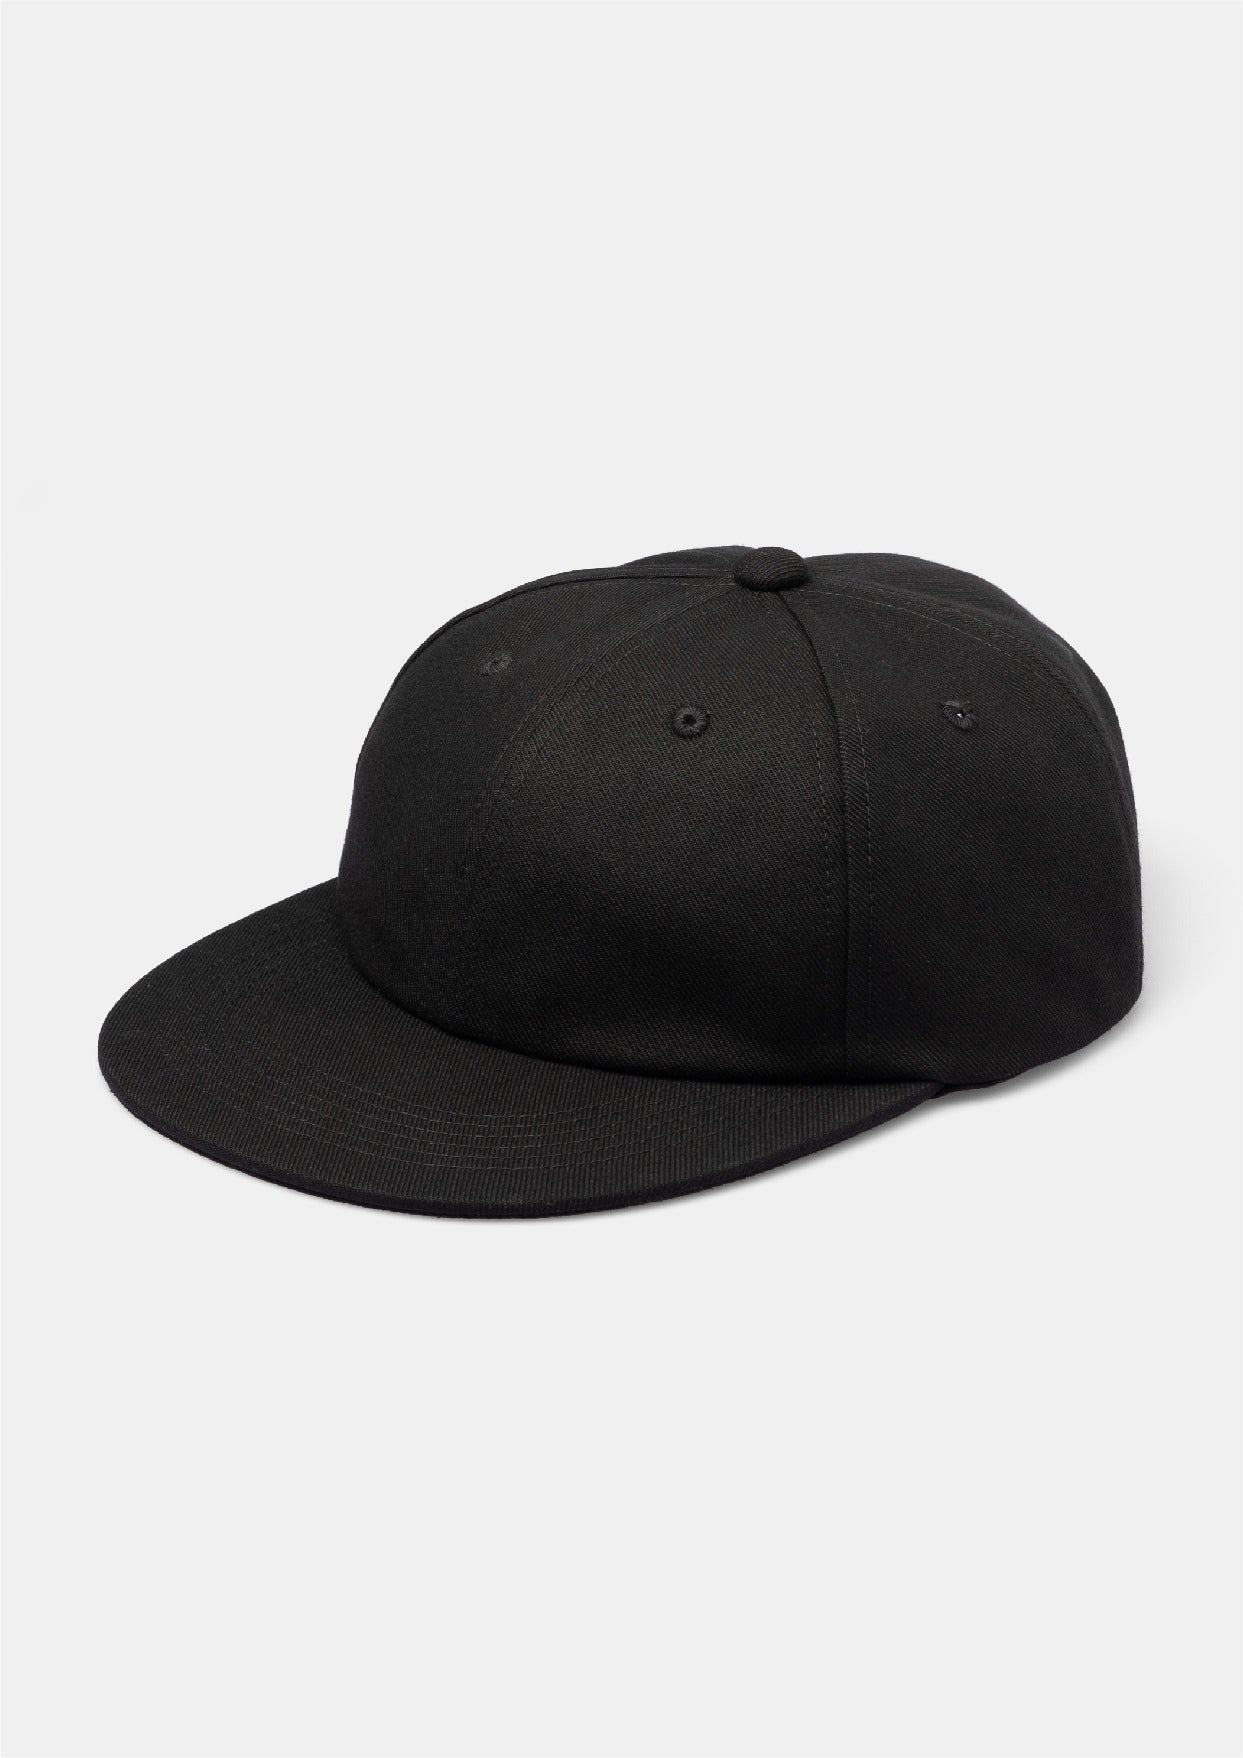 UNNAMED HEADWEAR LOW CAP ローキャップ 大きいサイズの帽子